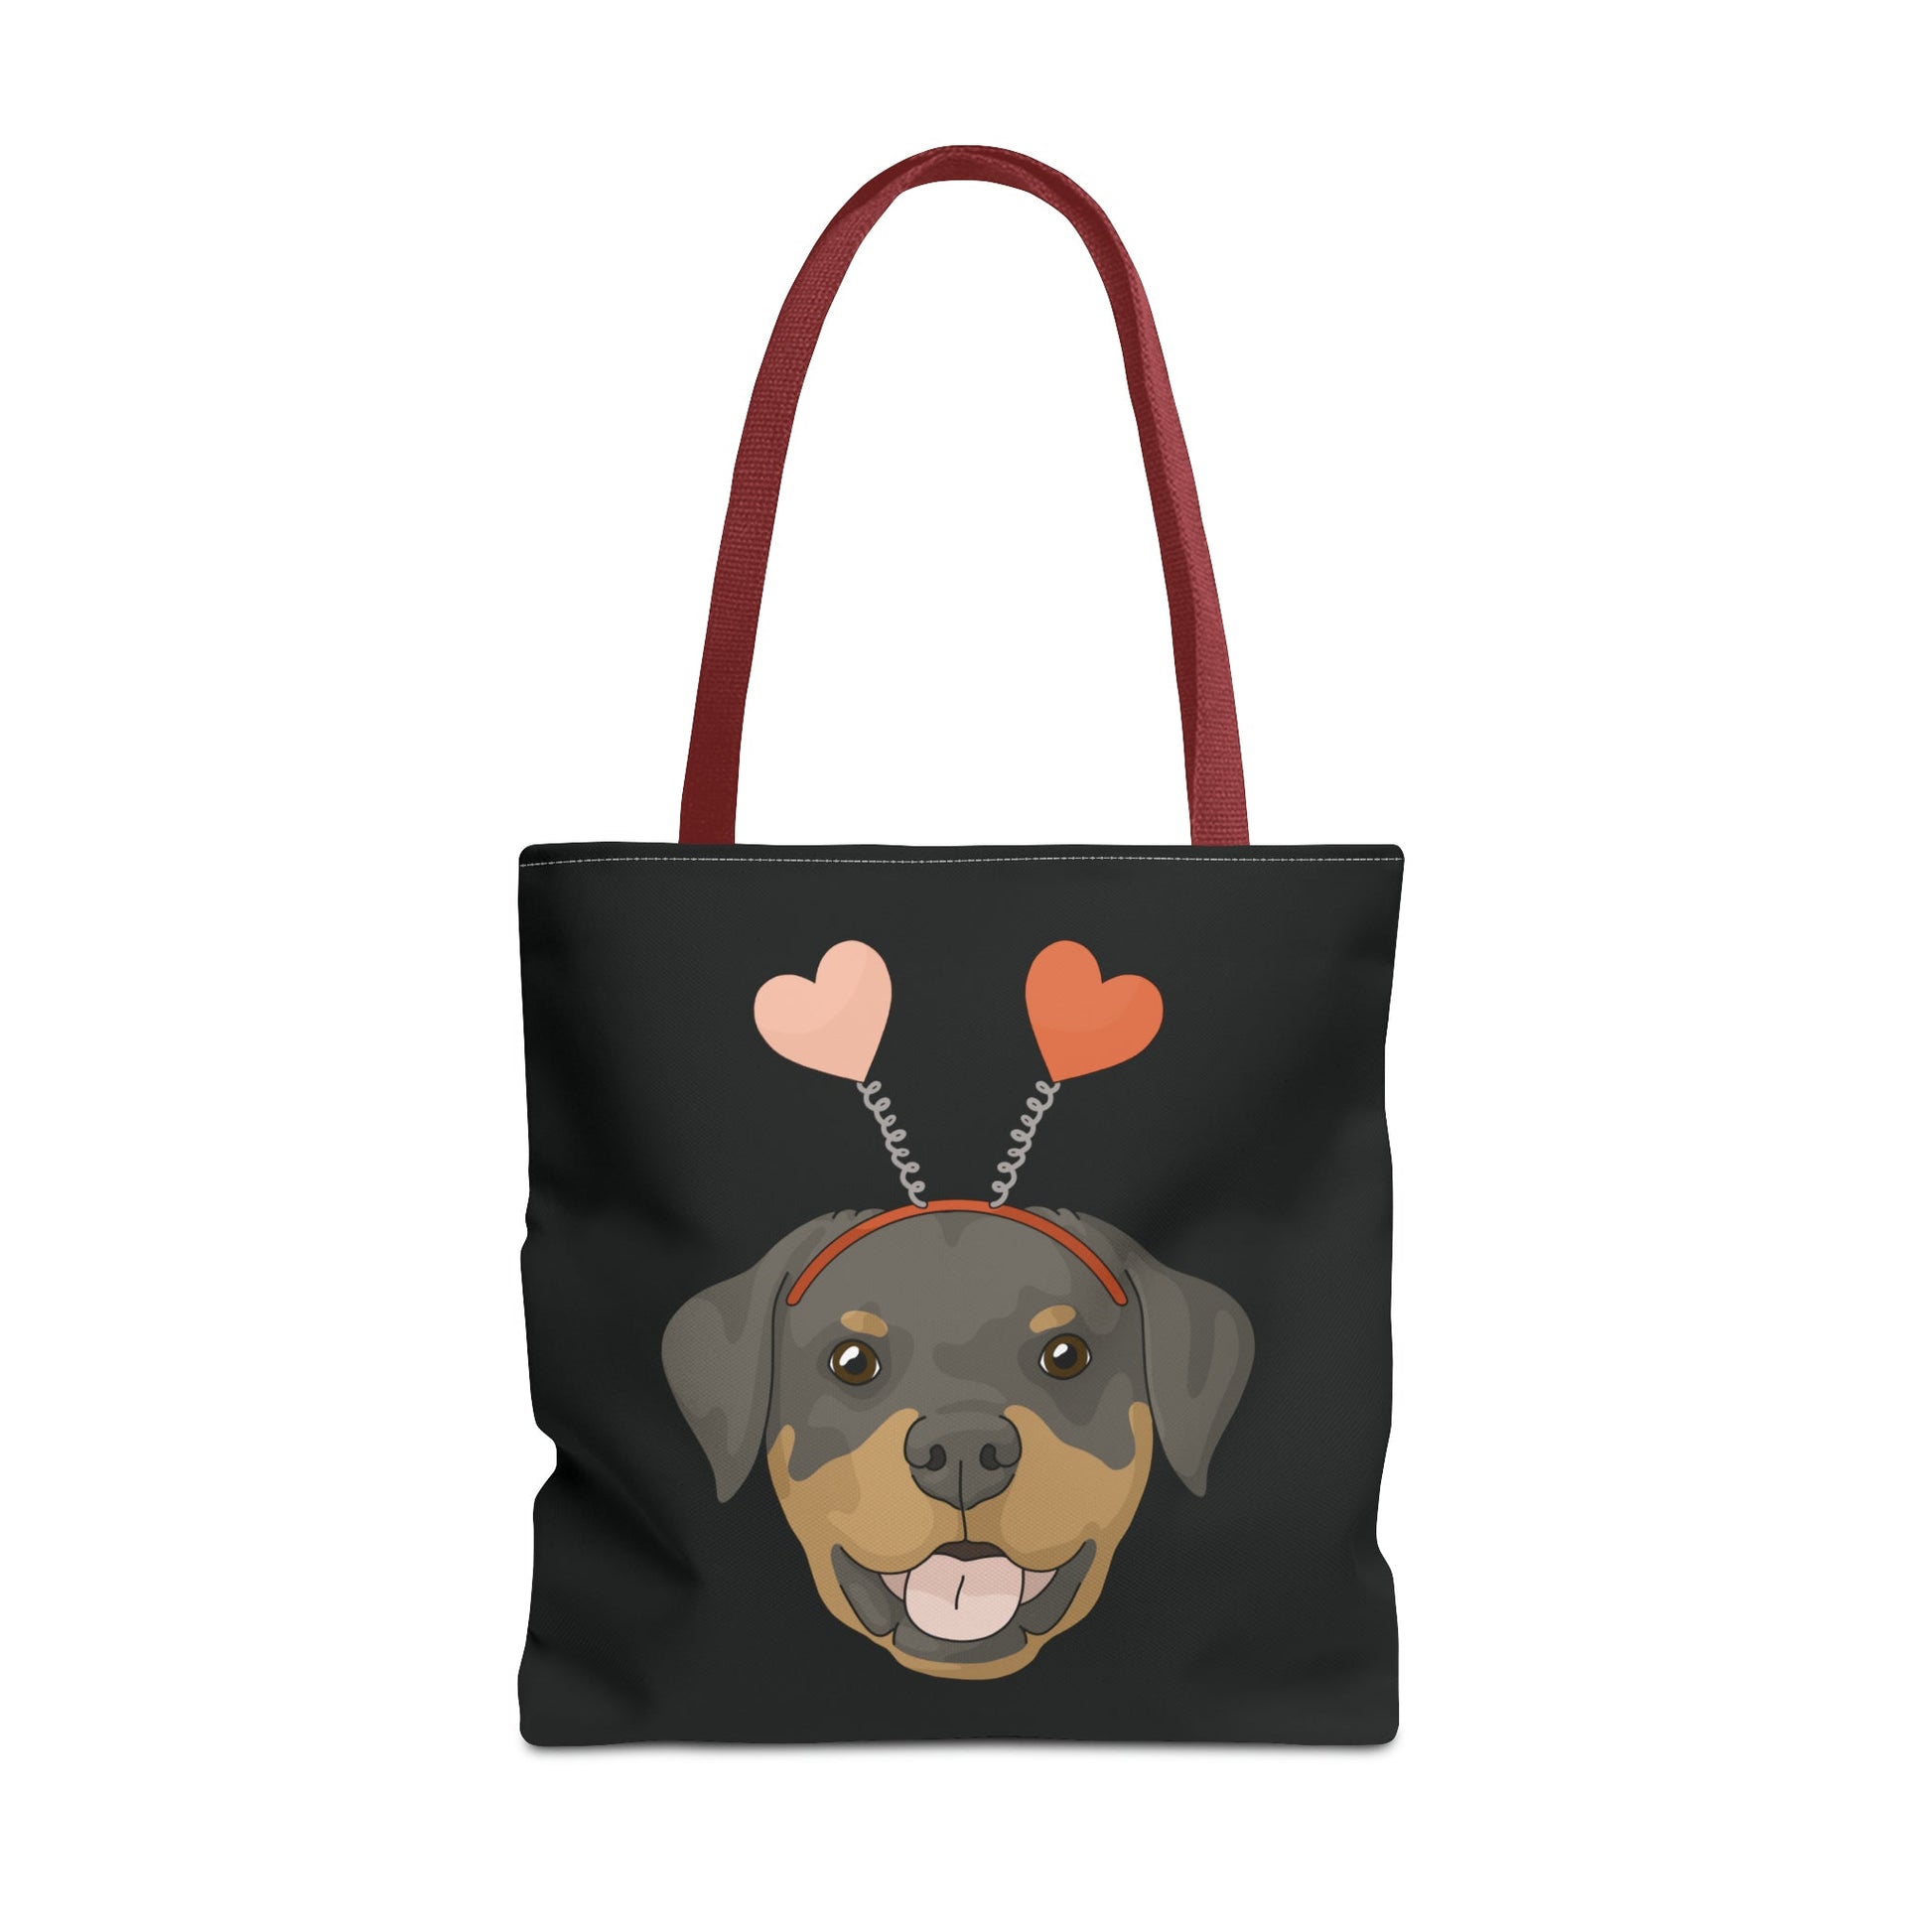 A Very Rottie Valentine | Tote Bag - Detezi Designs-30379386678091394396